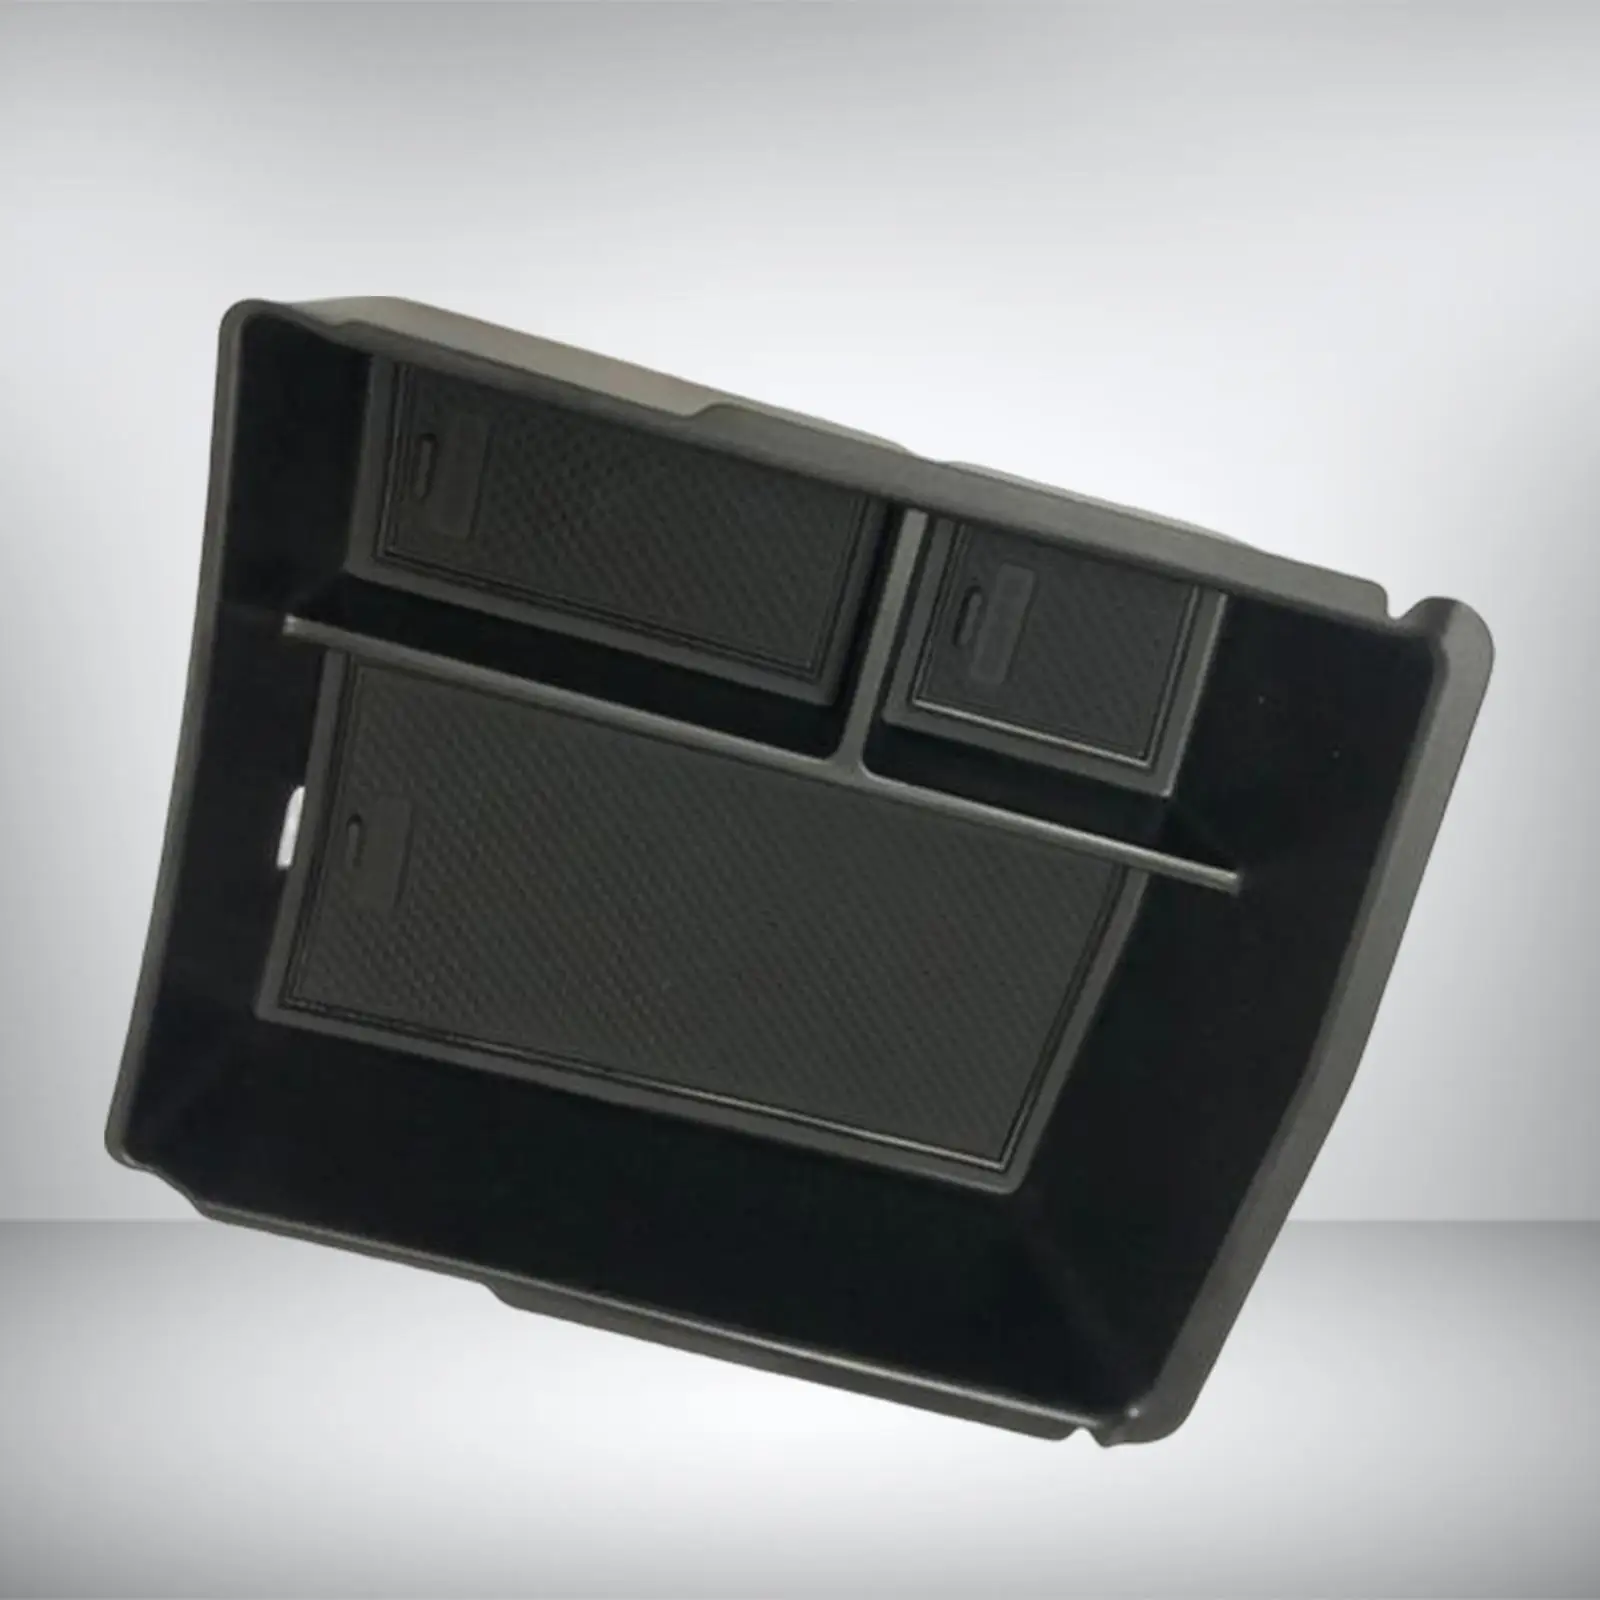 Automobile Center Console Armrest Storage Box Professional Keep Organized Car